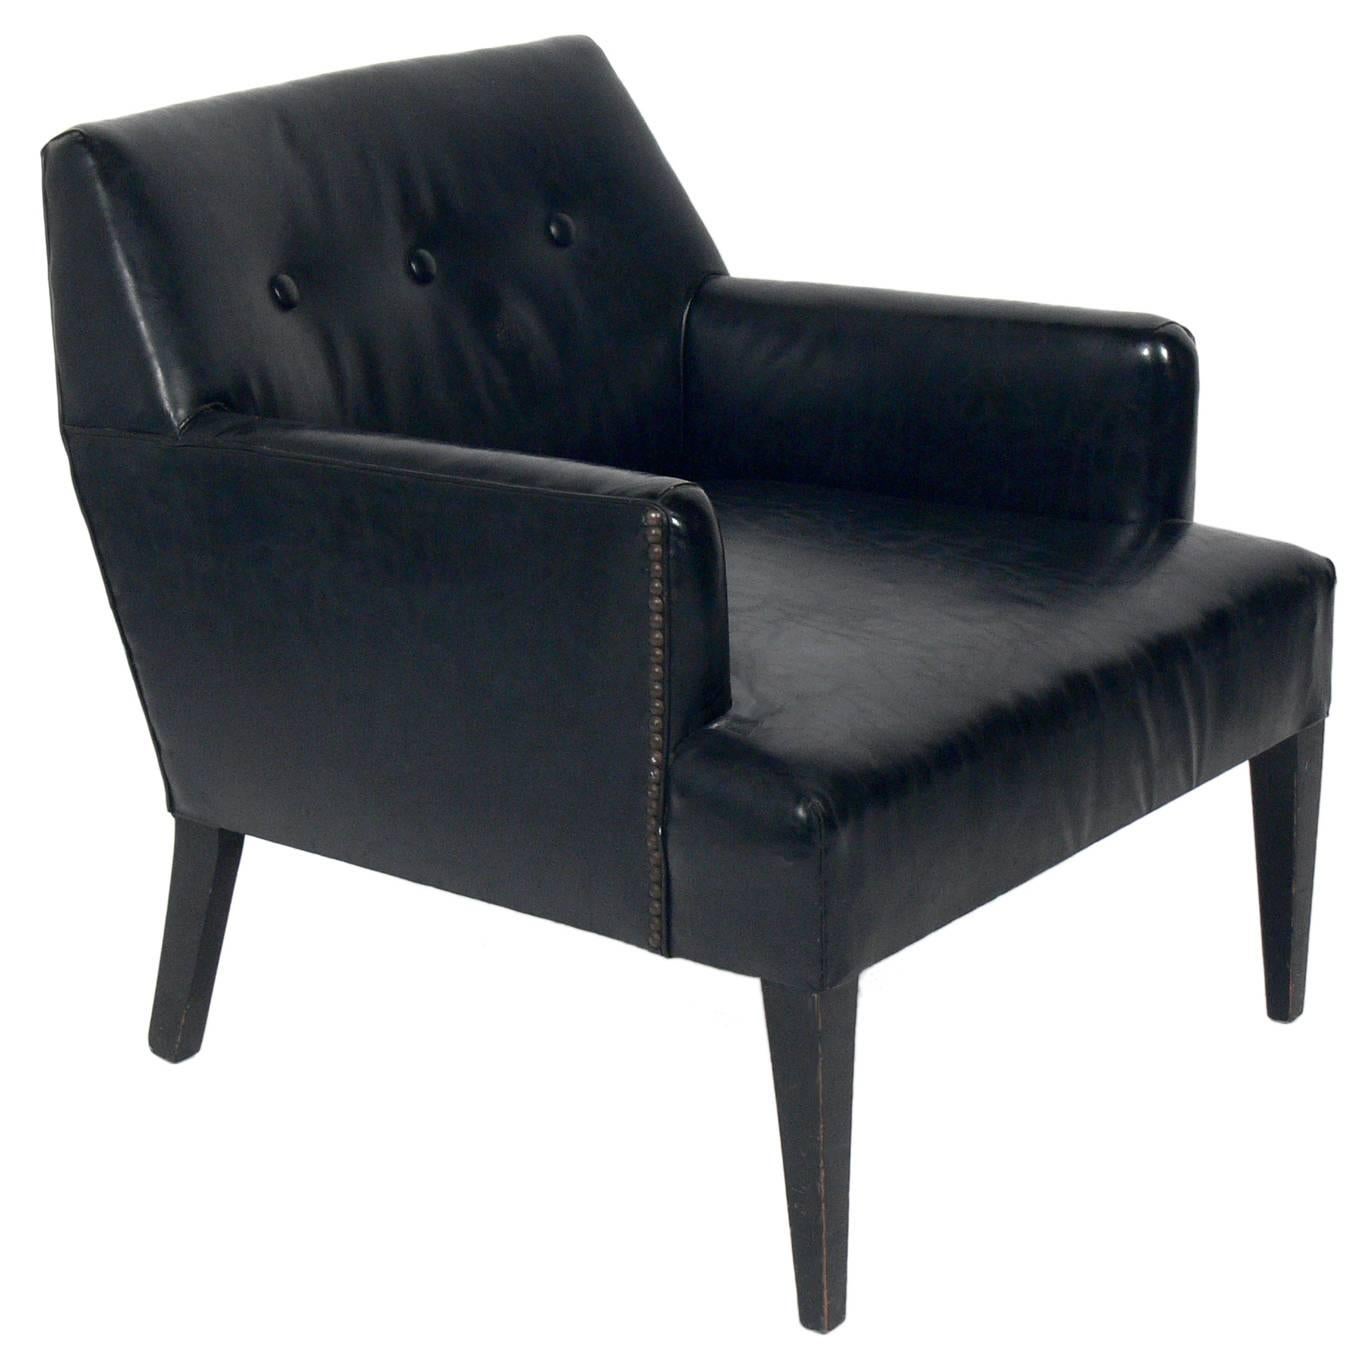 Angular Mid-Century Modern Lounge Chair